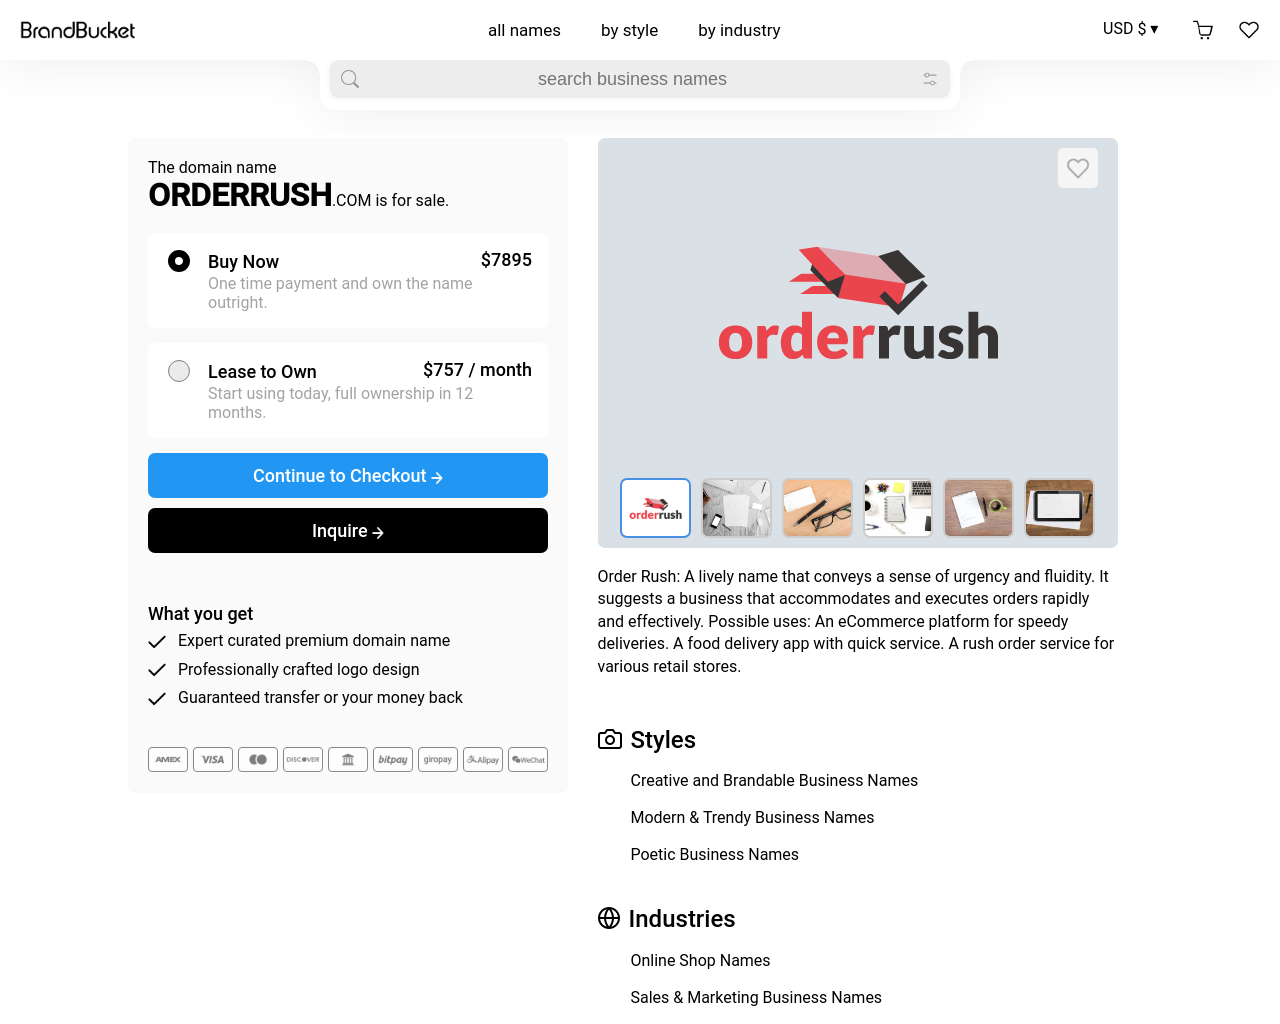 orderrush.com